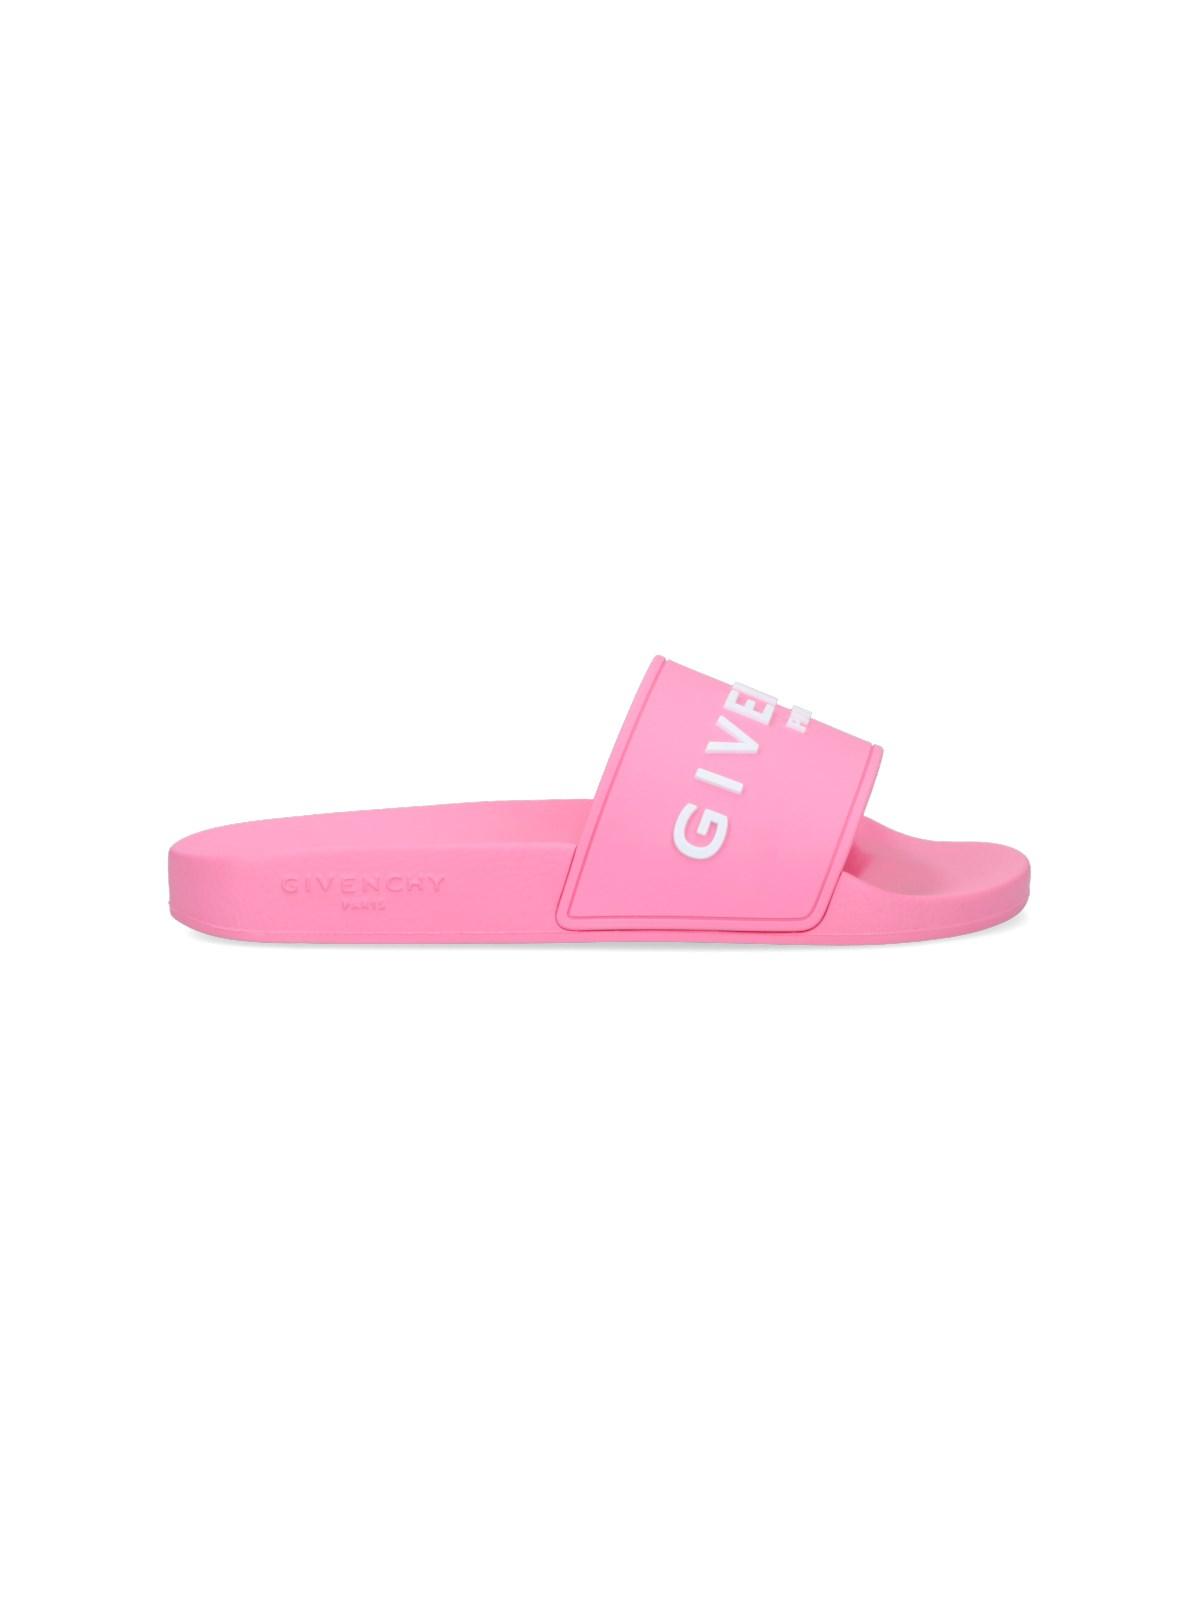 Givenchy Logo Slide Sandals in Pink | Lyst